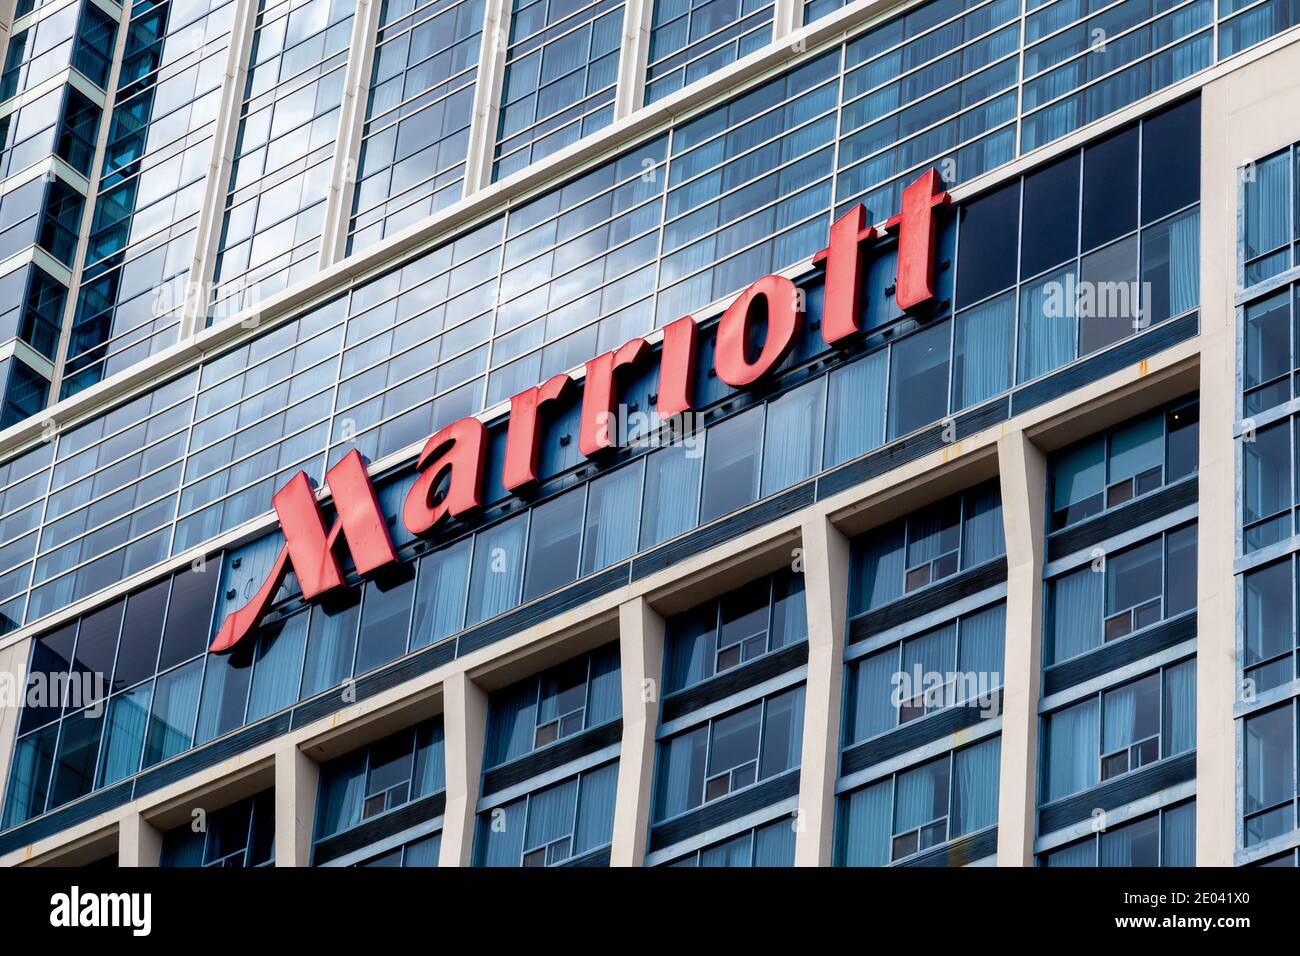 Marriott sign on the building in Niagara Falls, Ontario, Canada. Stock Photo